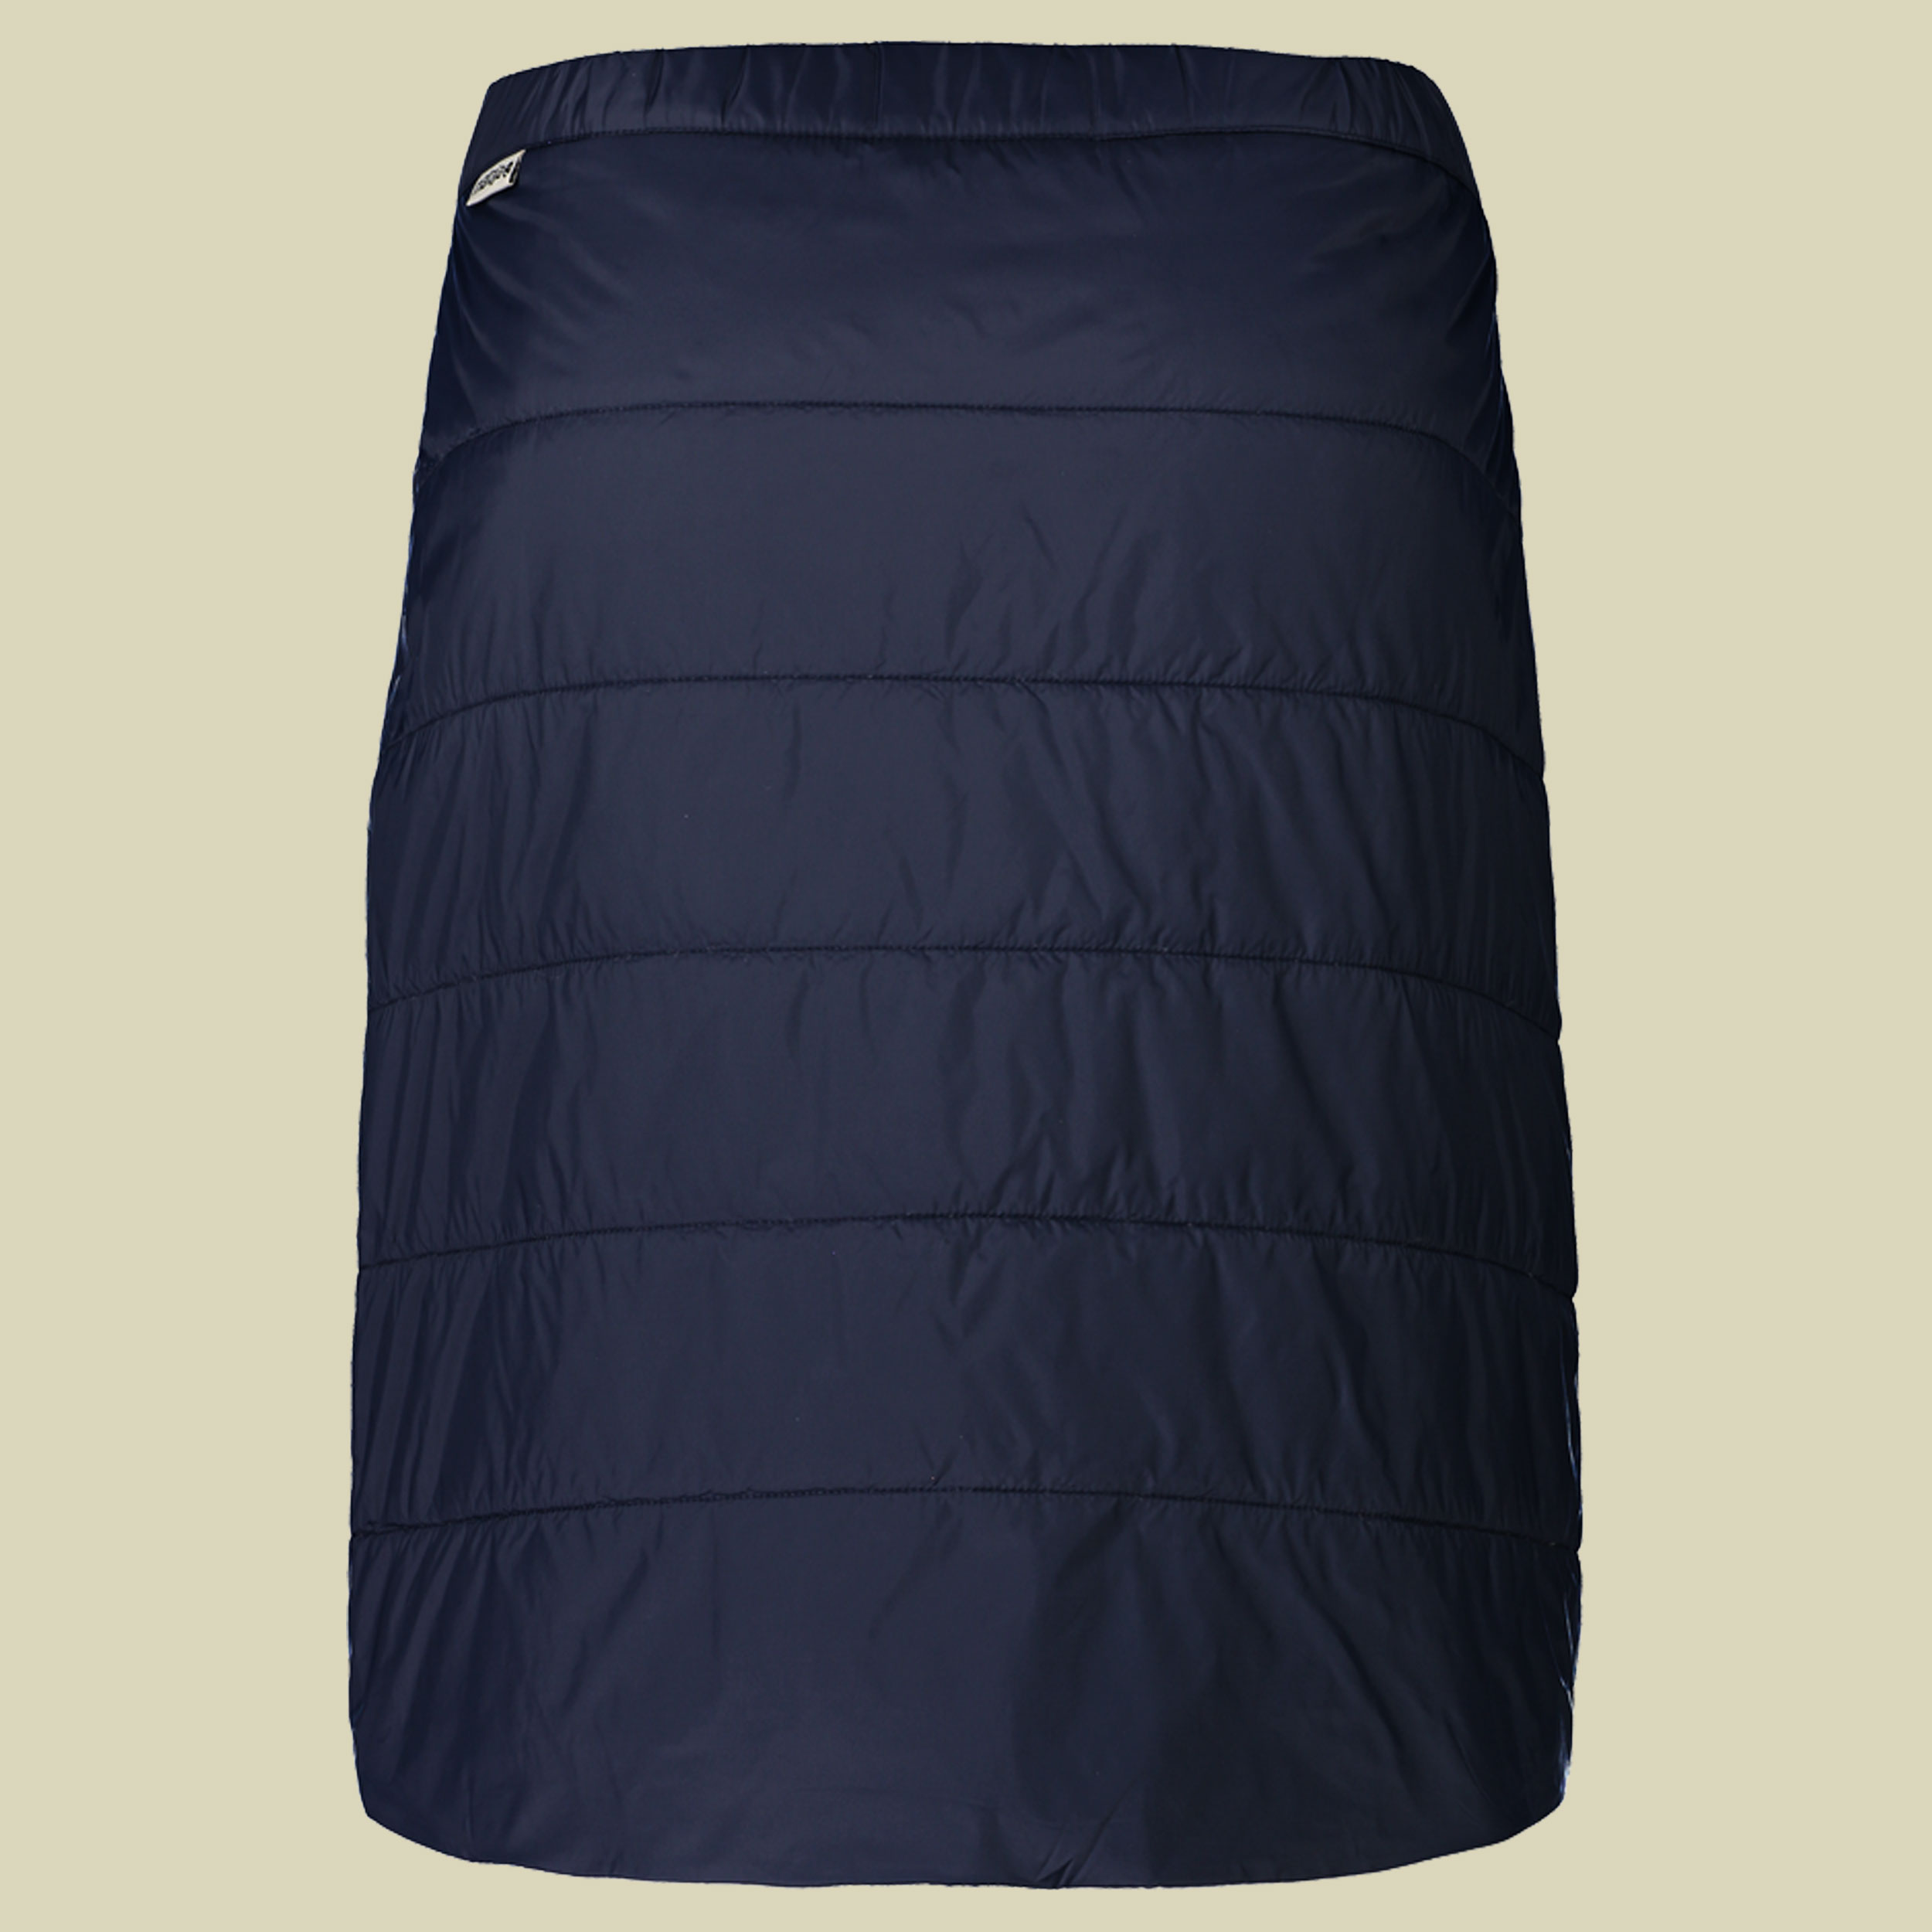 TurbinascaM. Primaloft Skirt Women Größe S Farbe mountain lake